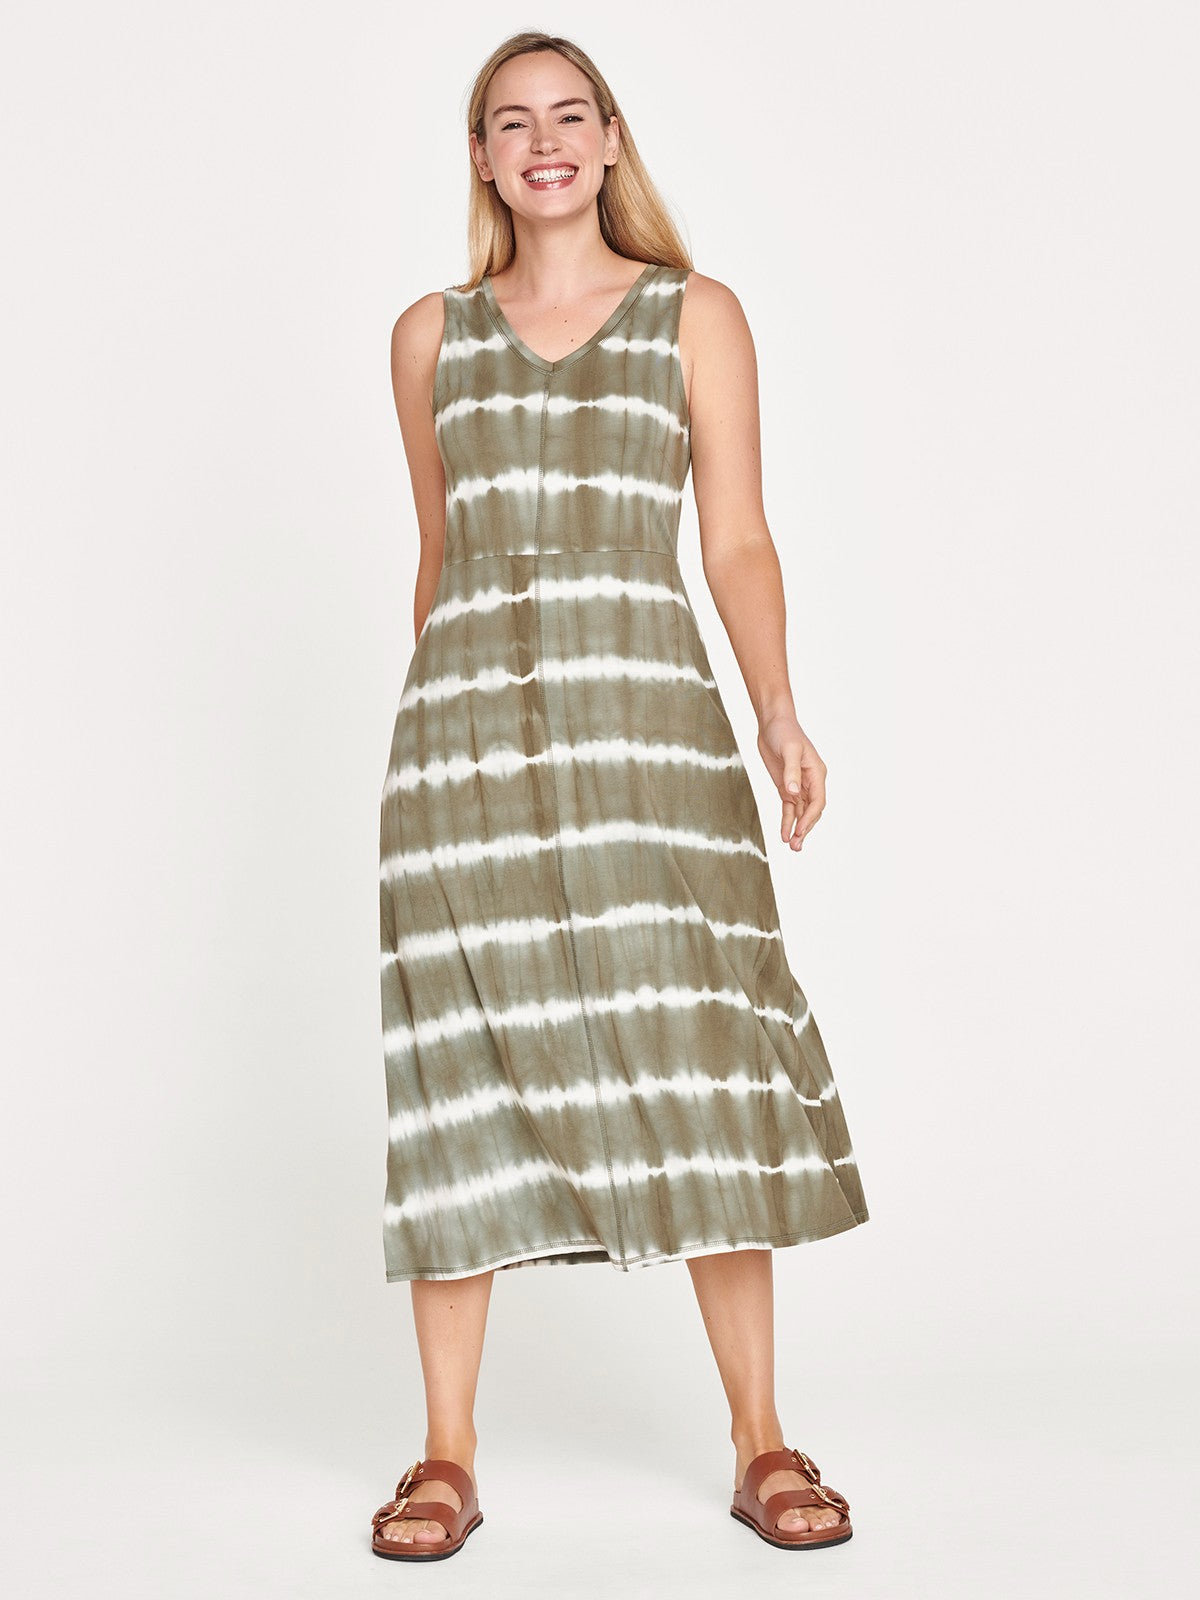 Cleo Organic Cotton Dress - Olive Green